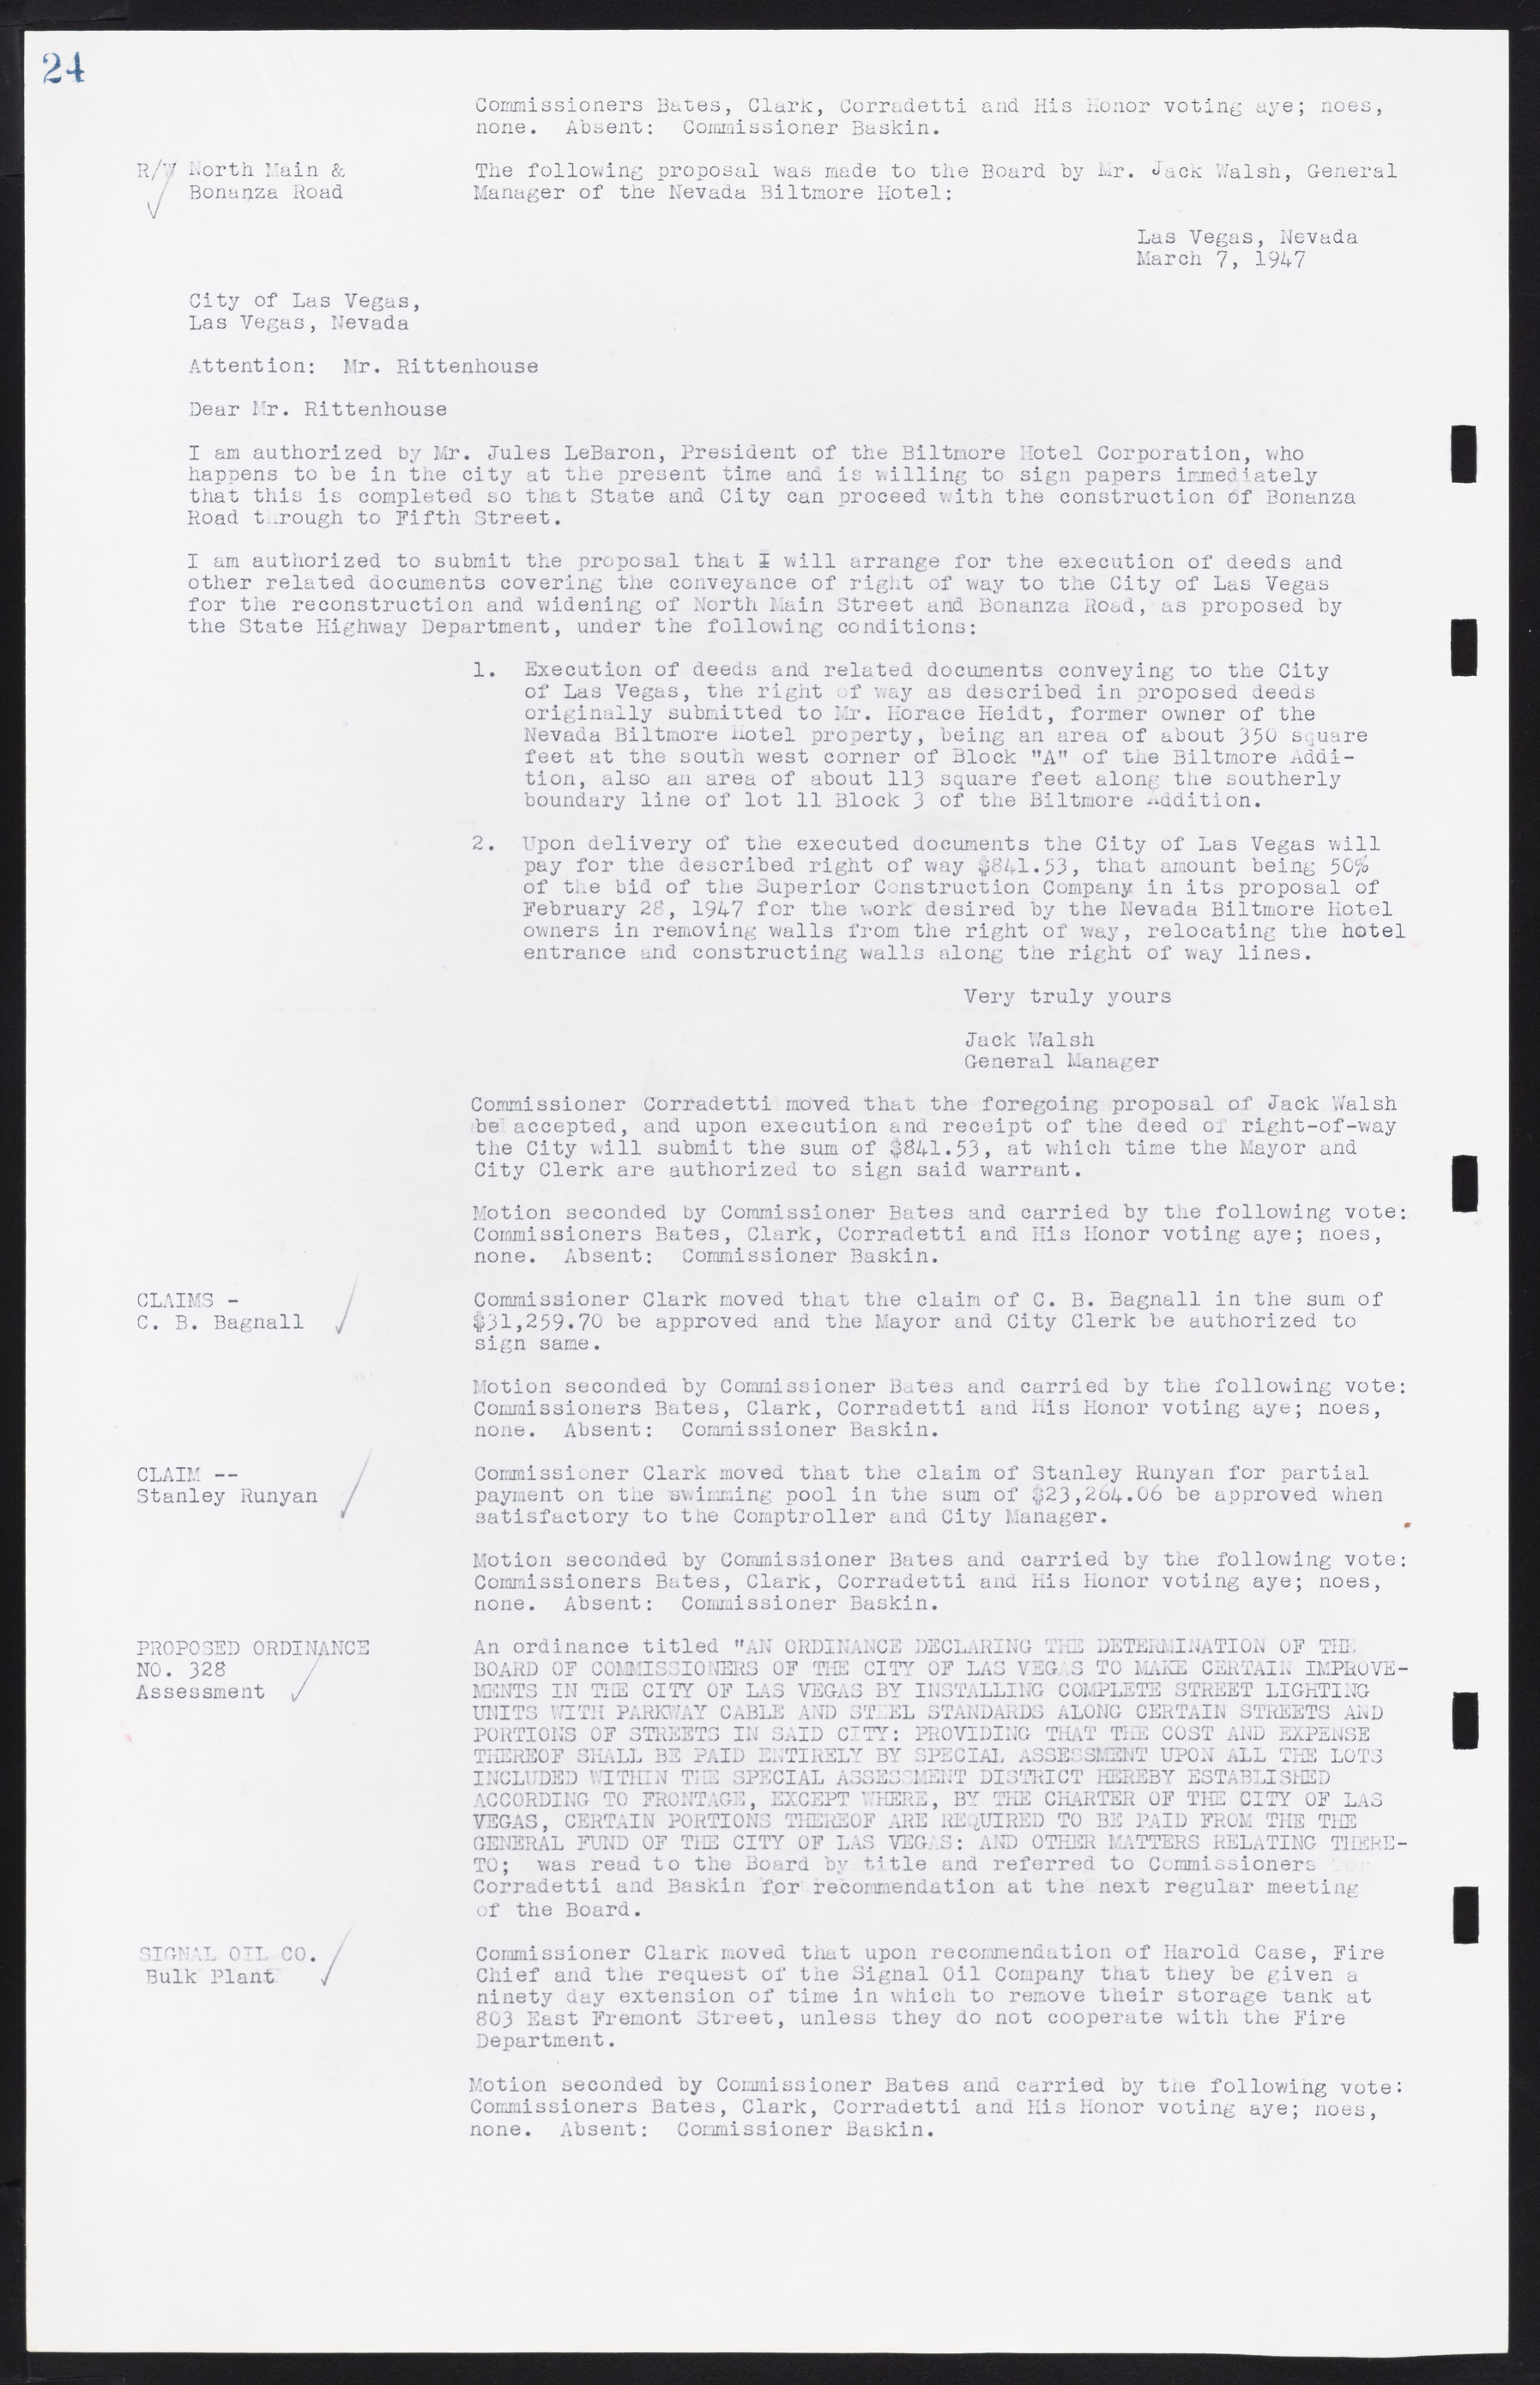 Las Vegas City Commission Minutes, January 7, 1947 to October 26, 1949, lvc000006-32